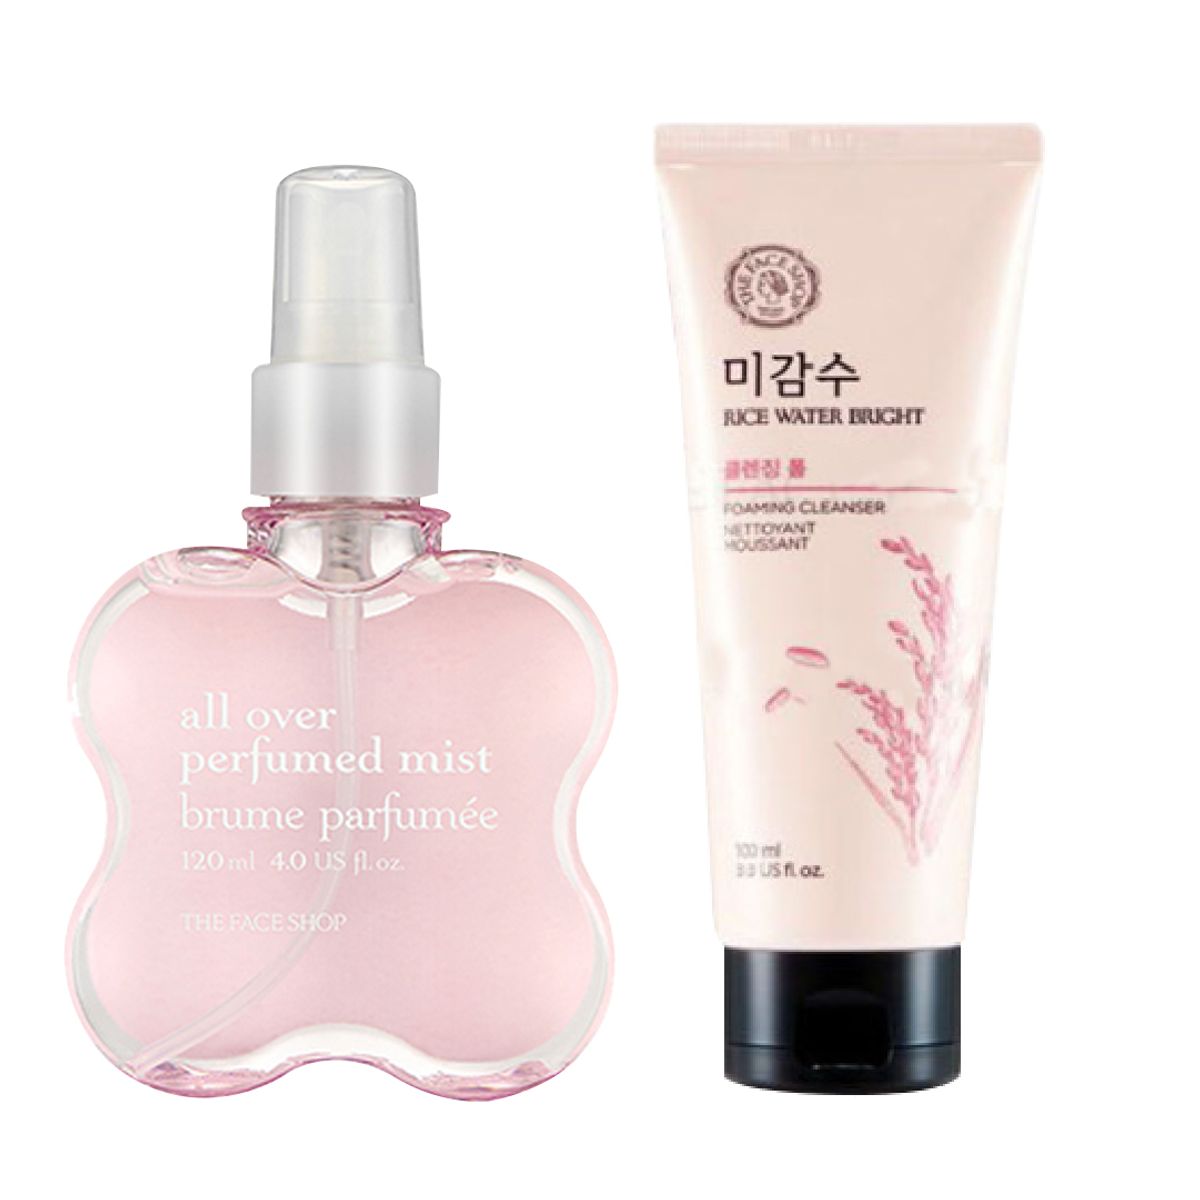 gift-combo-xit-duong-the-huong-nuoc-hoa-perfume-mist-01-secret-bloom-sua-rua-mat-rice-water-bright-100ml-1